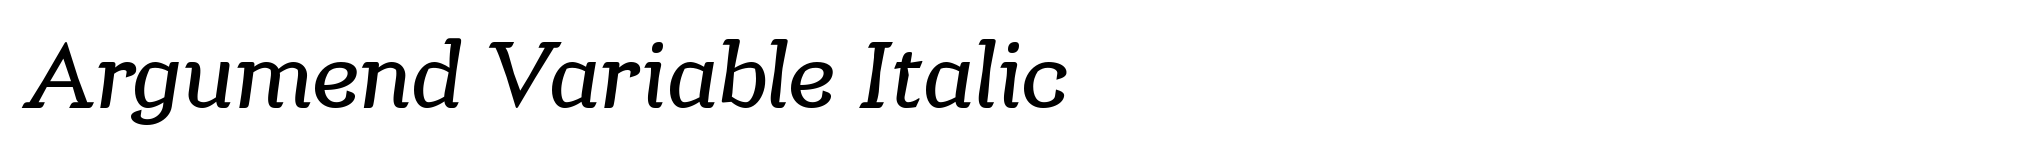 Argumend Variable Italic image